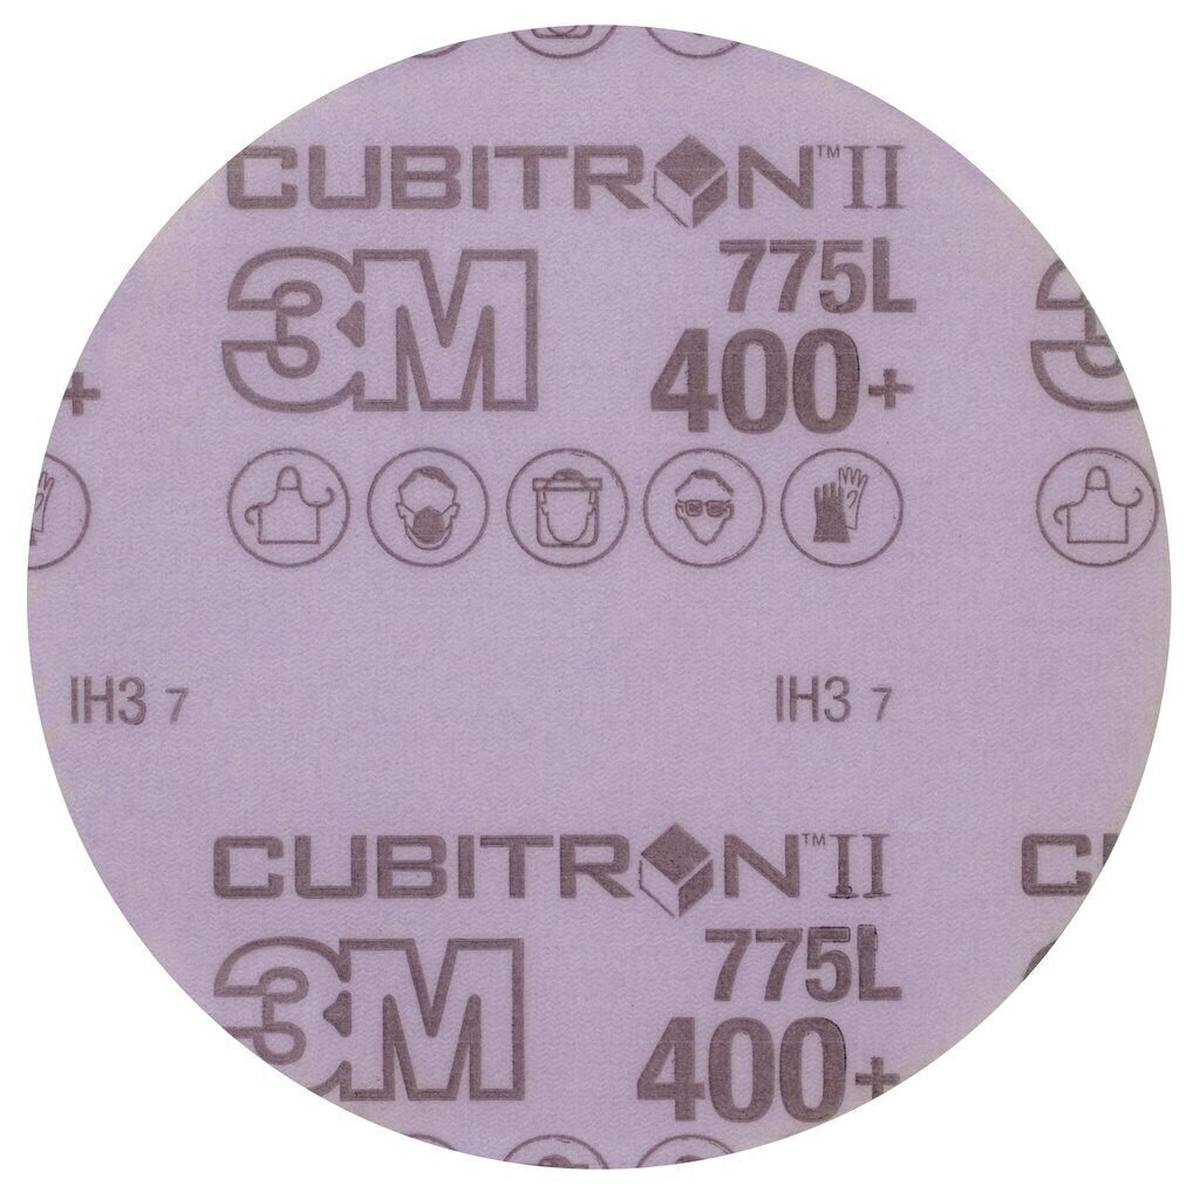 3M Cubitron II Disco de película Hookit 775L, 125 mm, 400+, sin perforar #05055